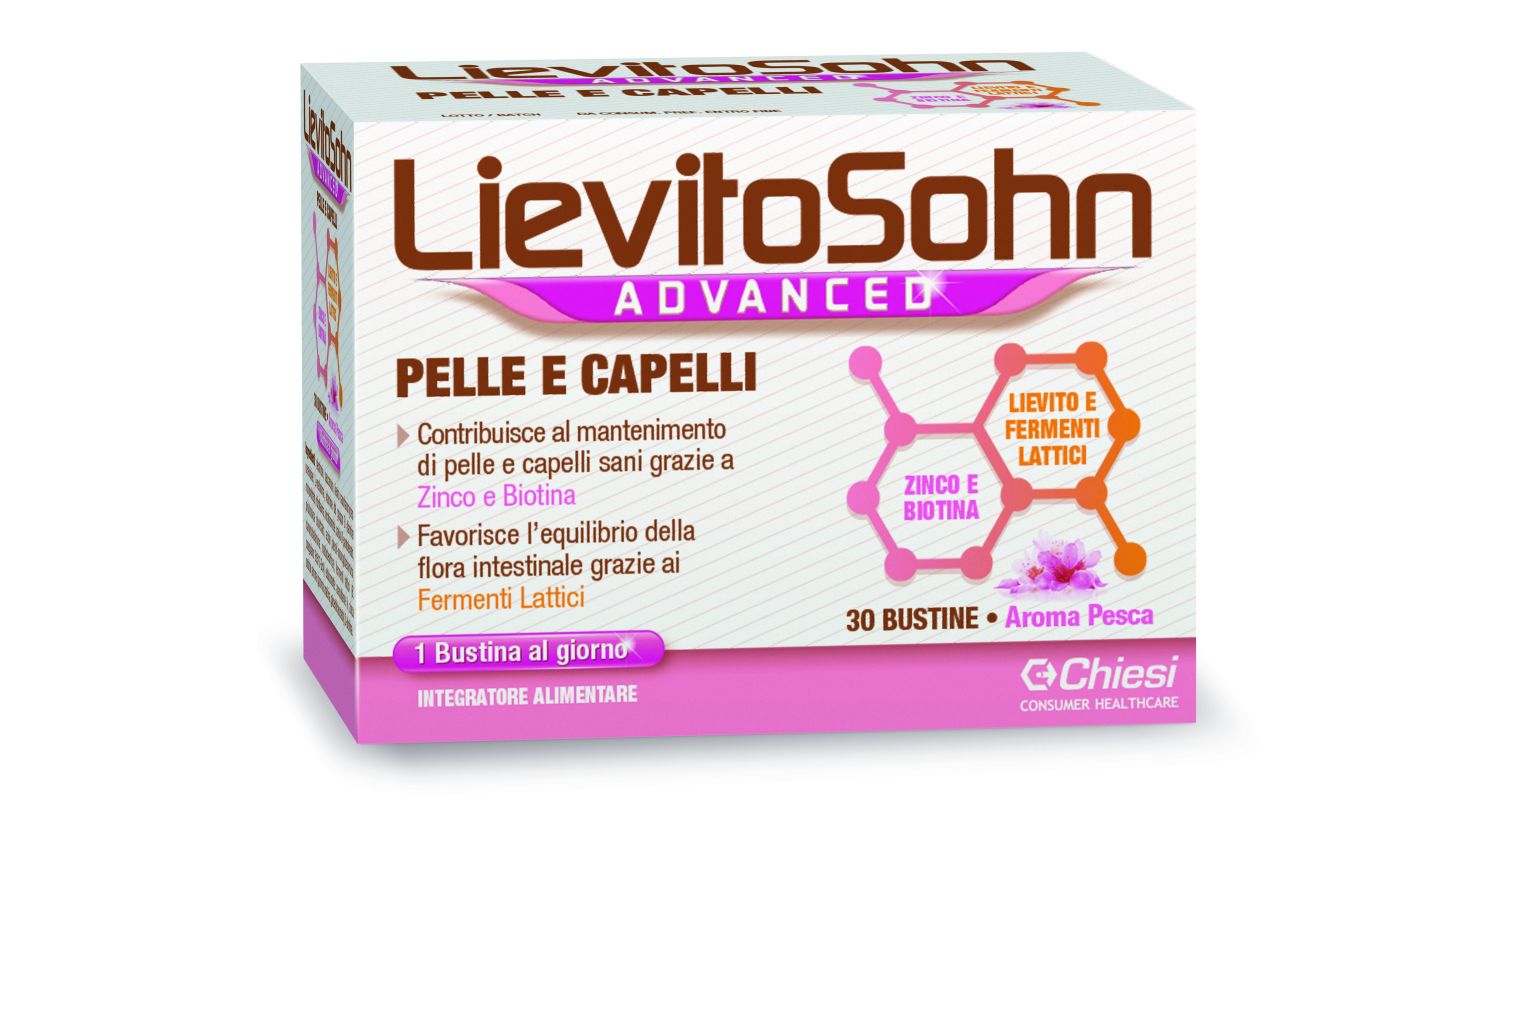 973726538 - Lievitosohn Advanced Pelle E Capelli 30 Bustine - 7892494_3.jpg